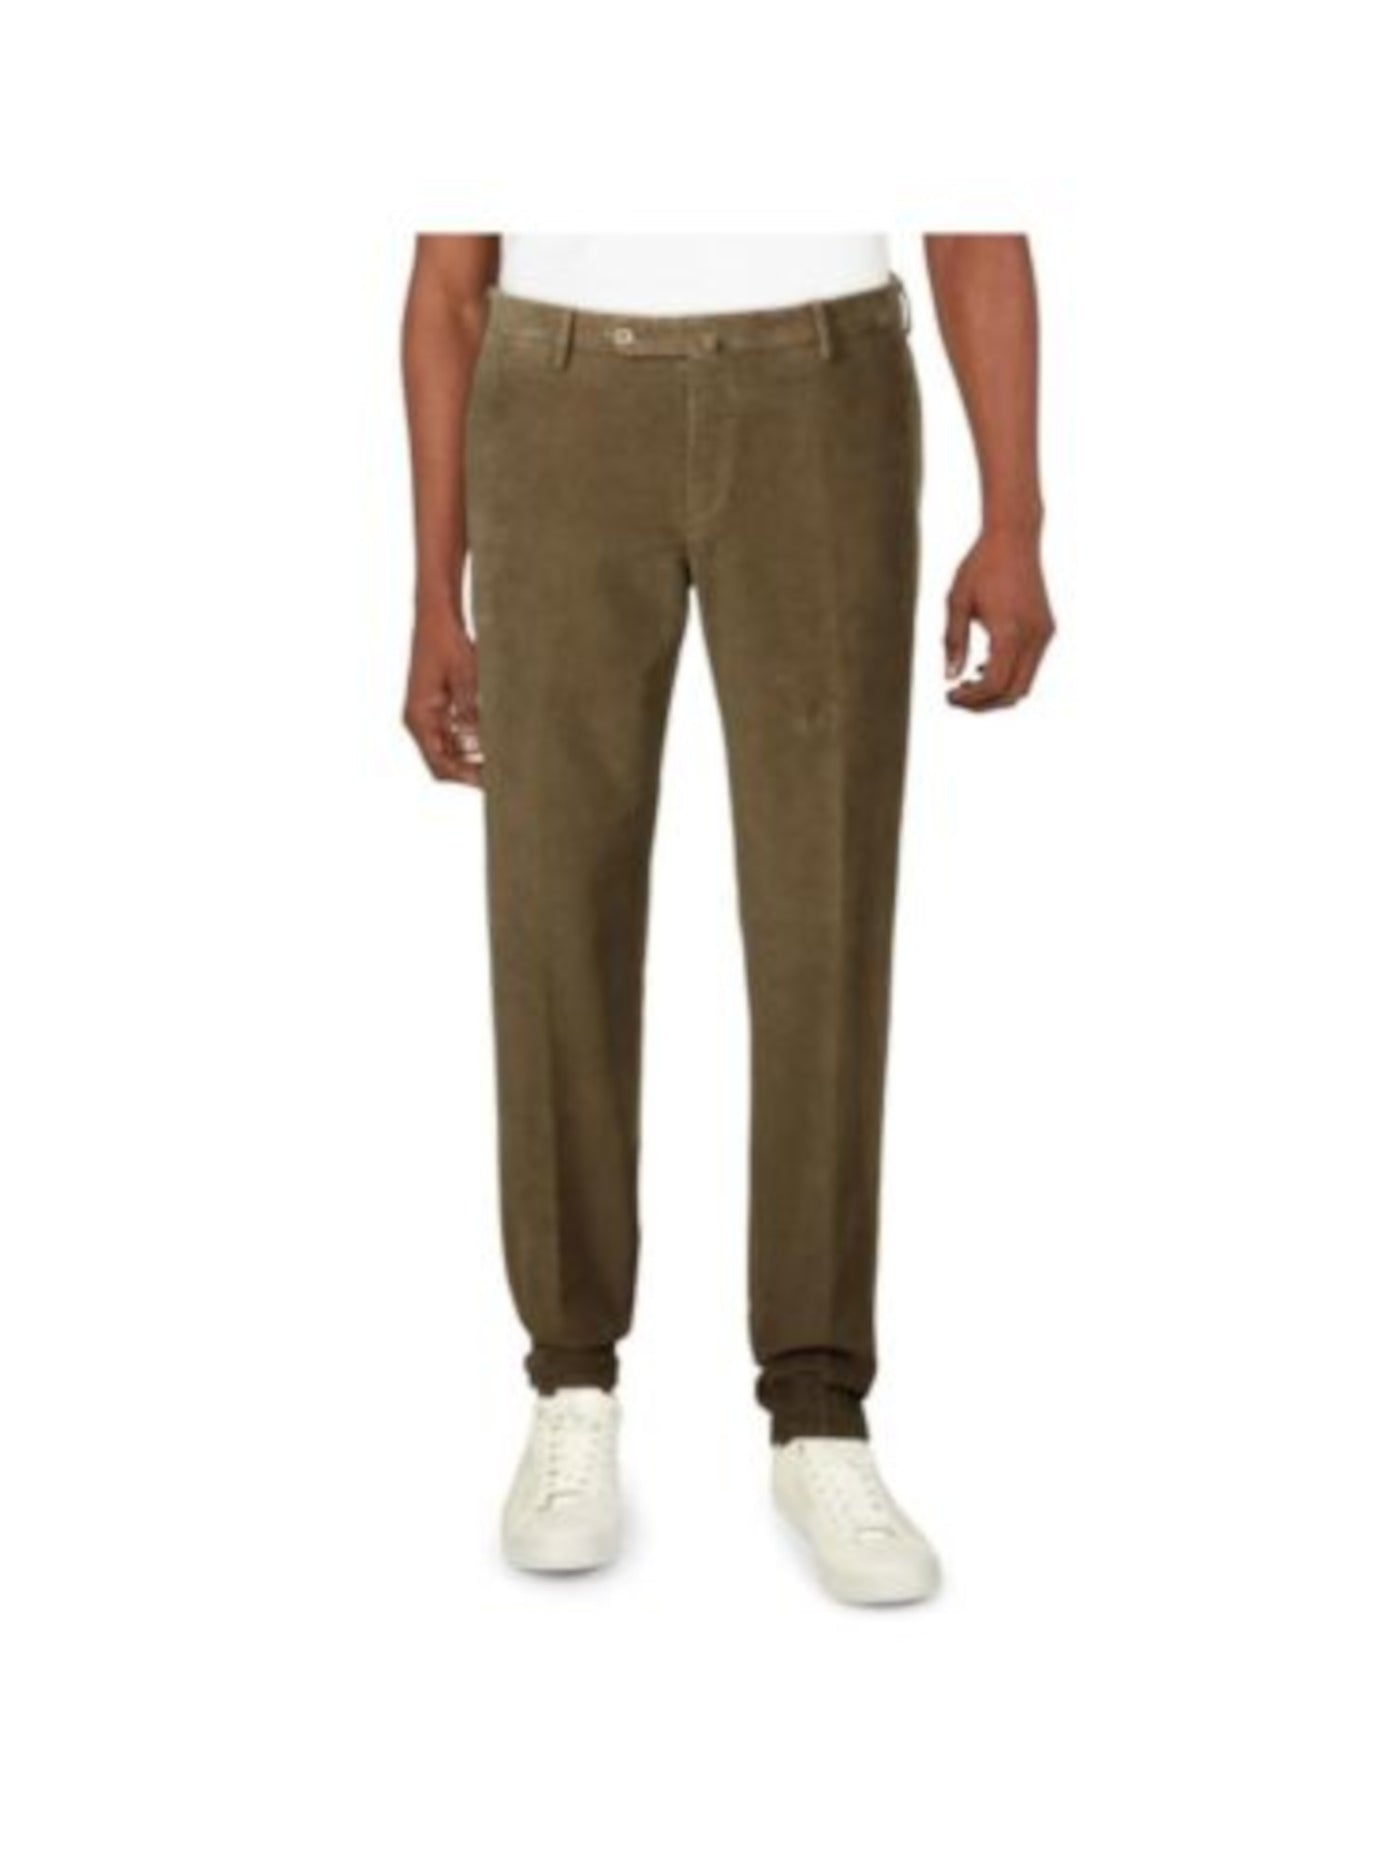 TORIN OPIFICIO Mens Green Flat Front, Stretch, Regular Fit Pants 56